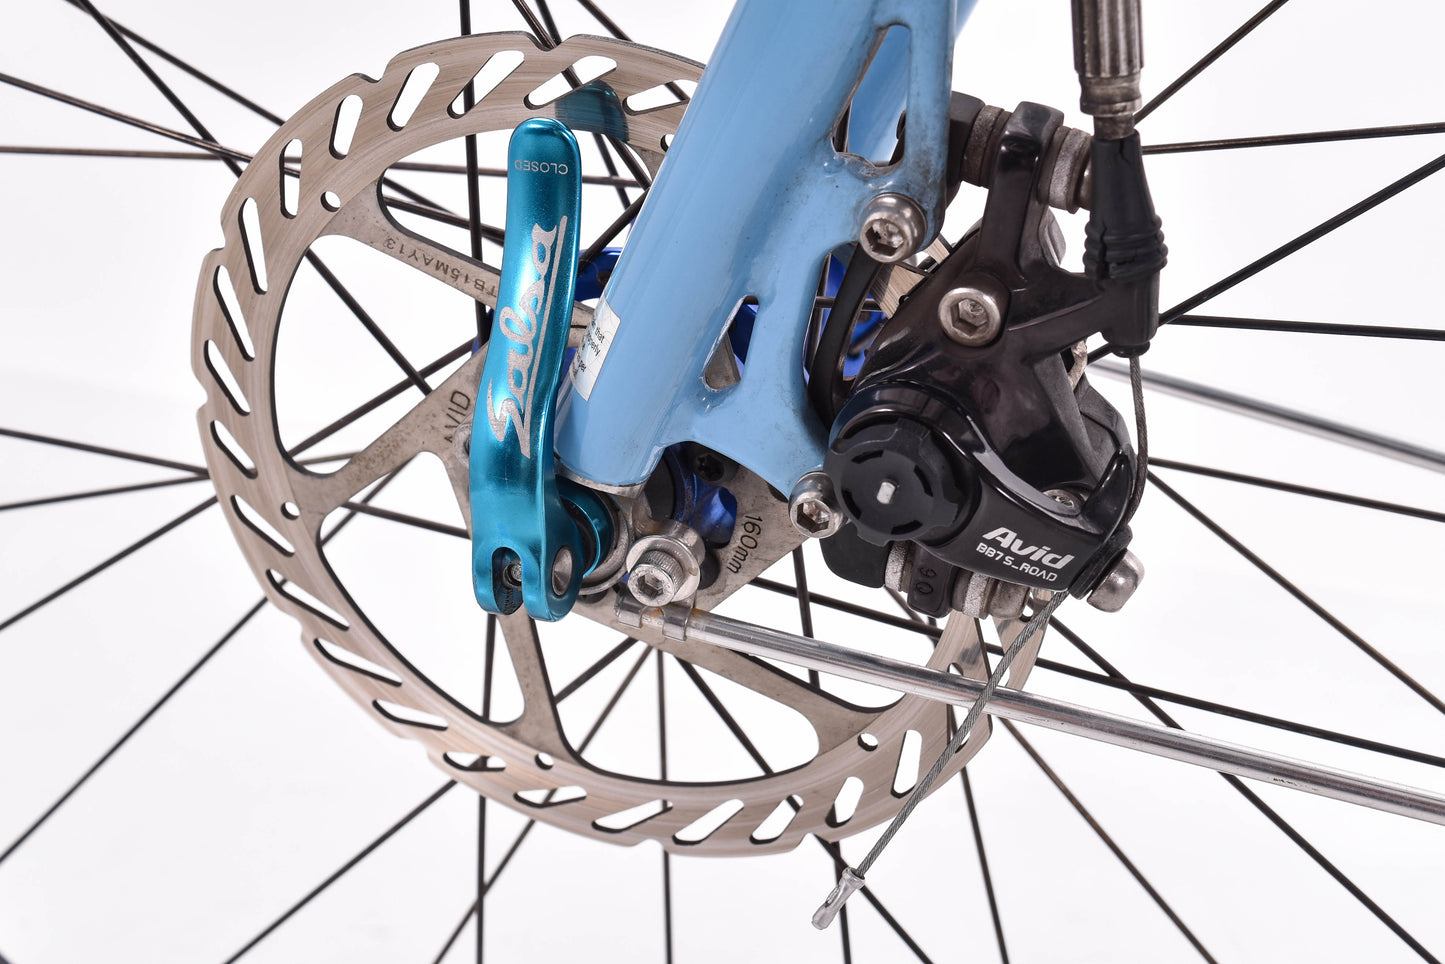 USED Salsa Vaya Steel Touring Bike 52cm Blue 26" Wheels